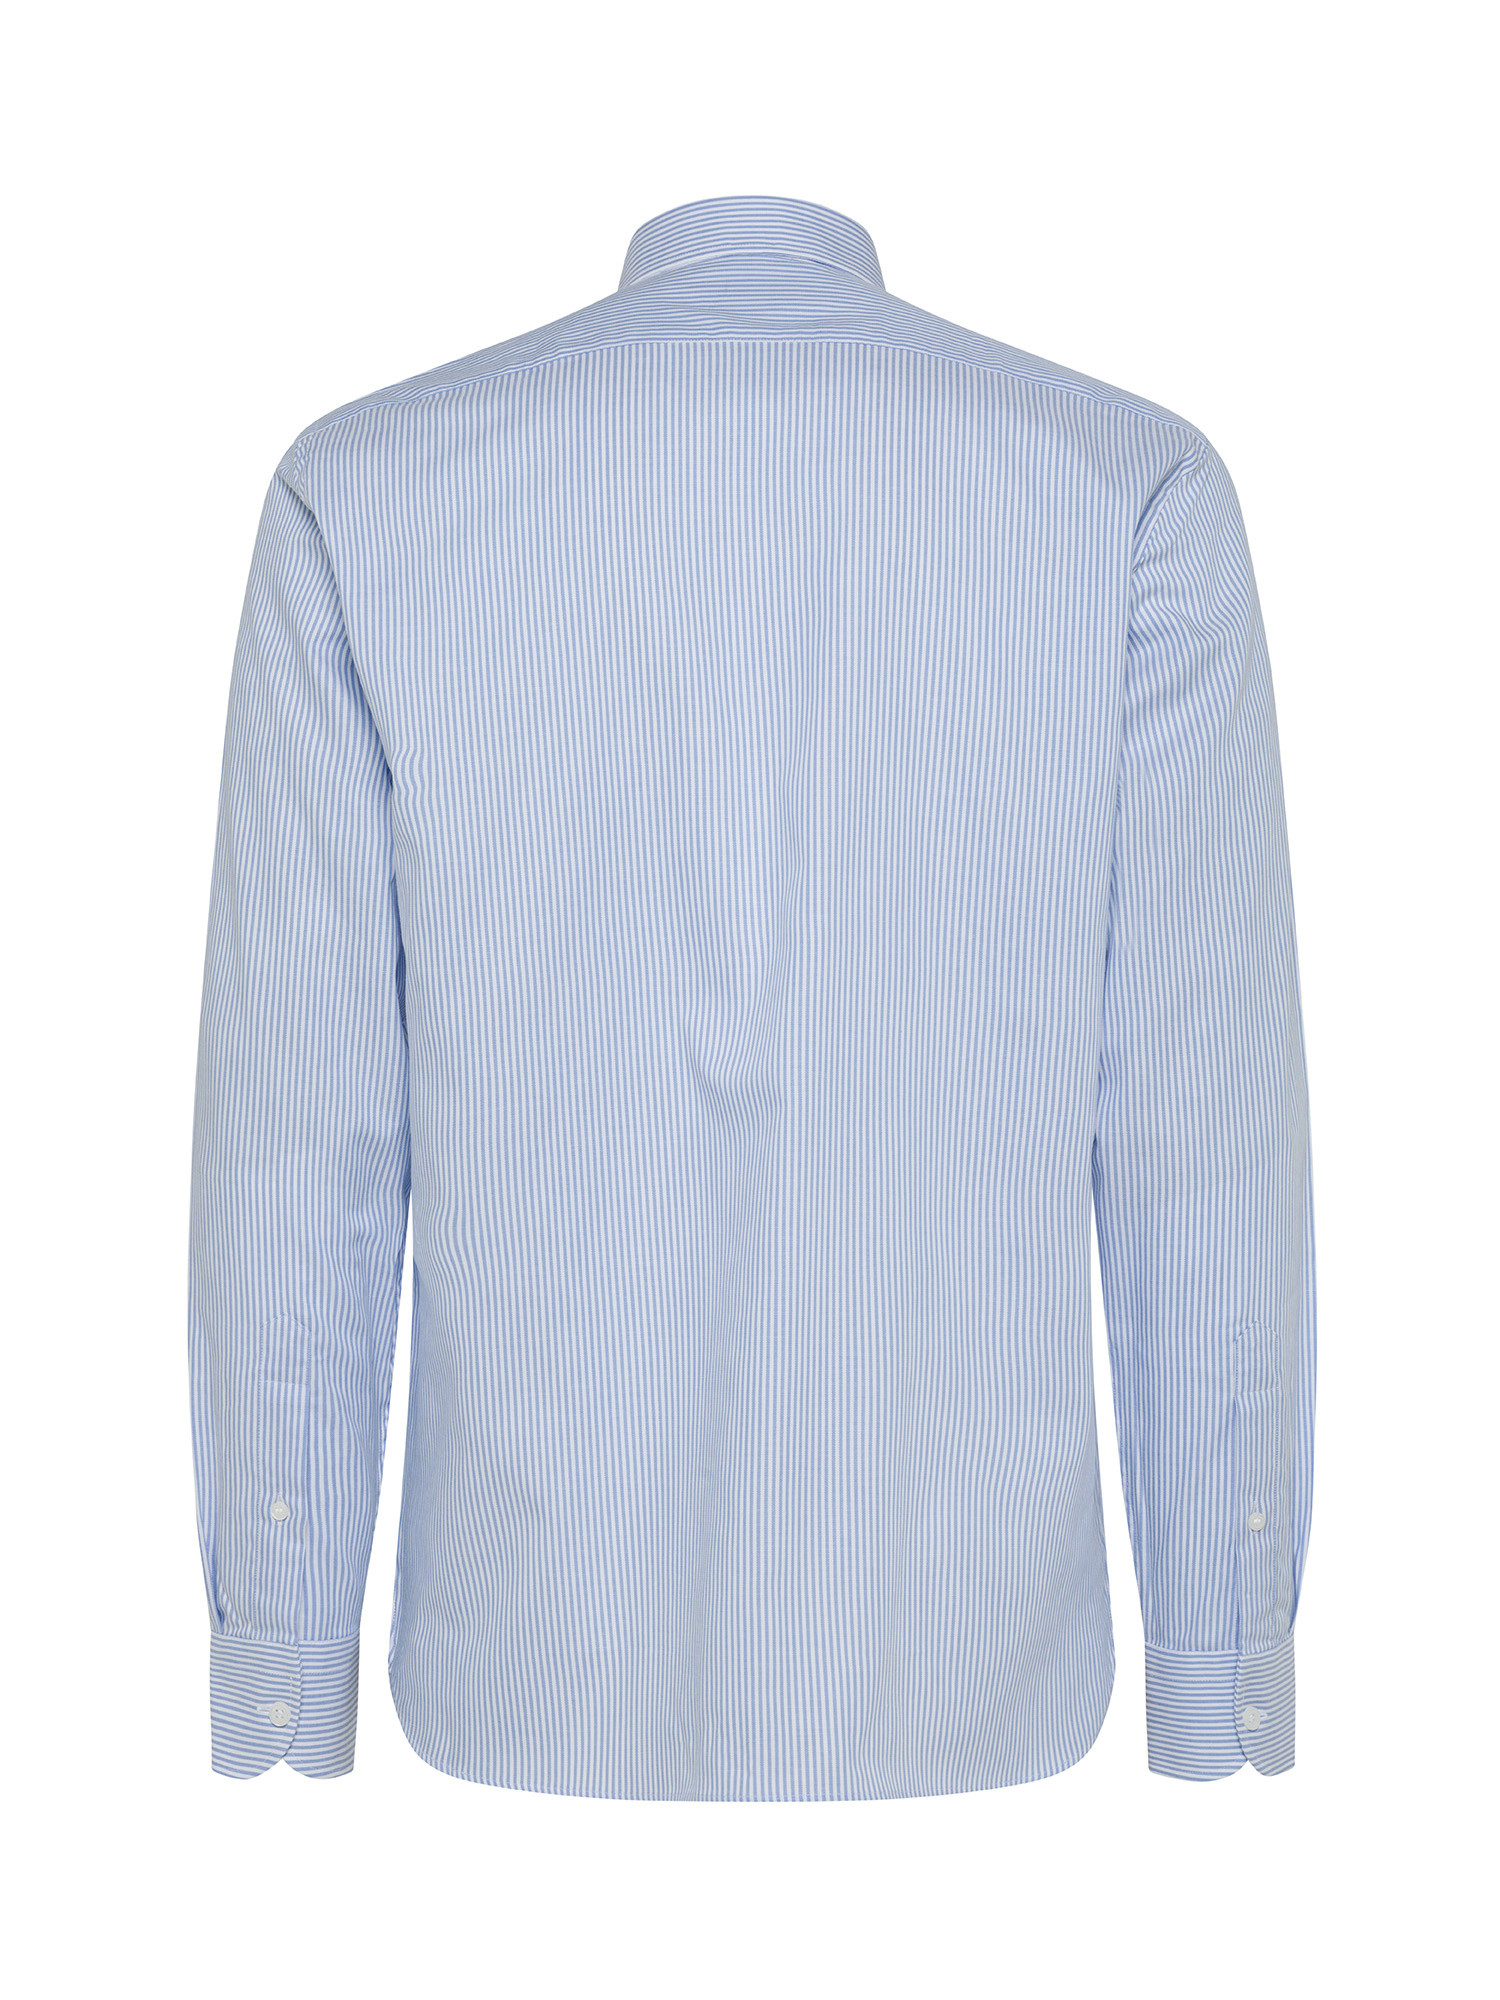 Luca D'Altieri - Tailor fit shirt in pure cotton, Light Blue, large image number 1